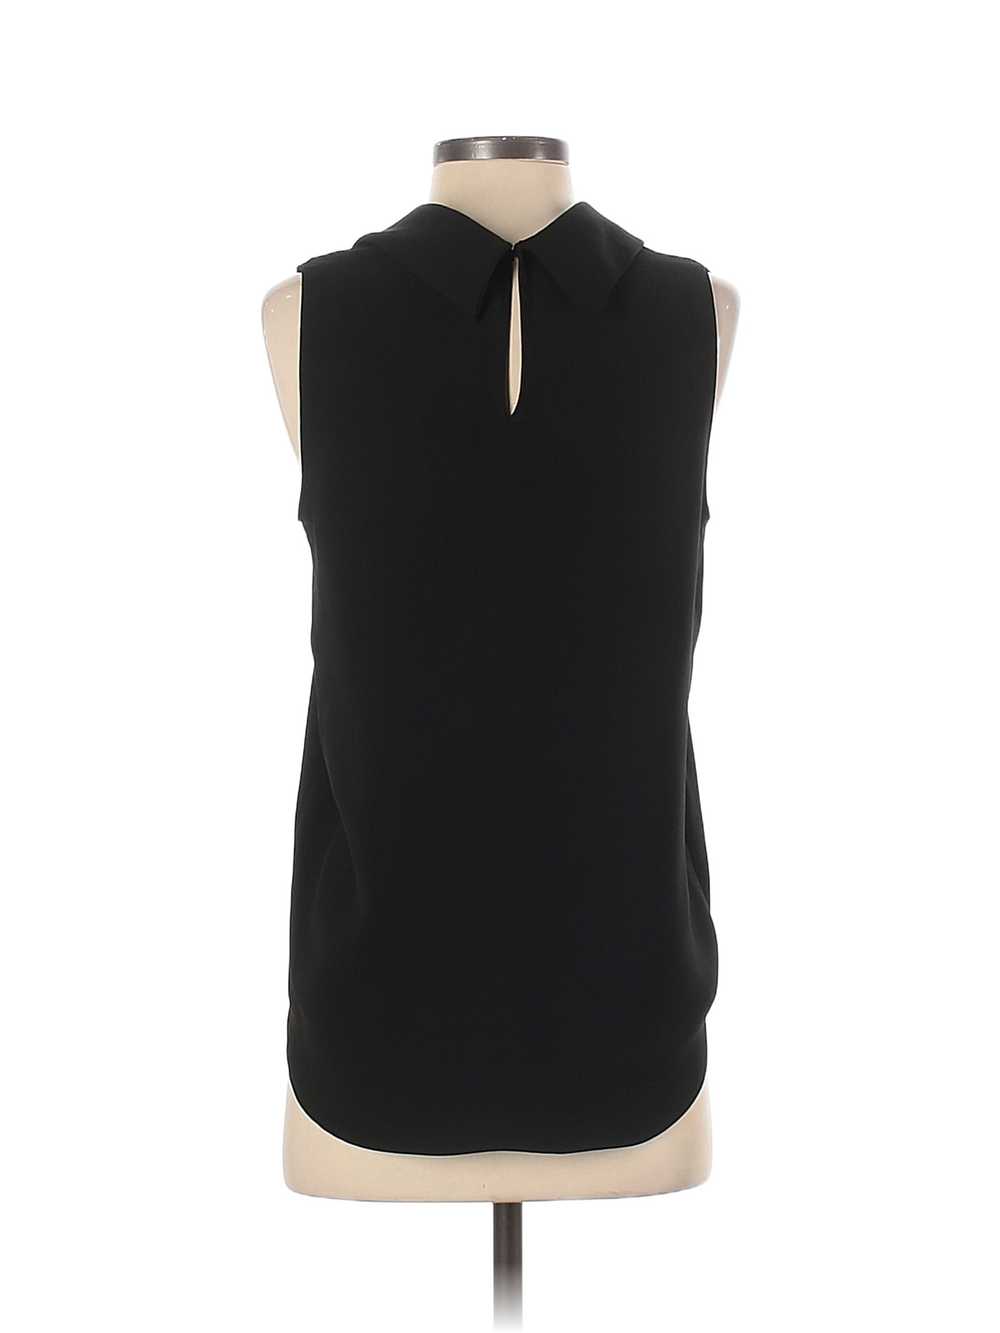 Zara Basic Women Black Sleeveless Blouse S - image 2